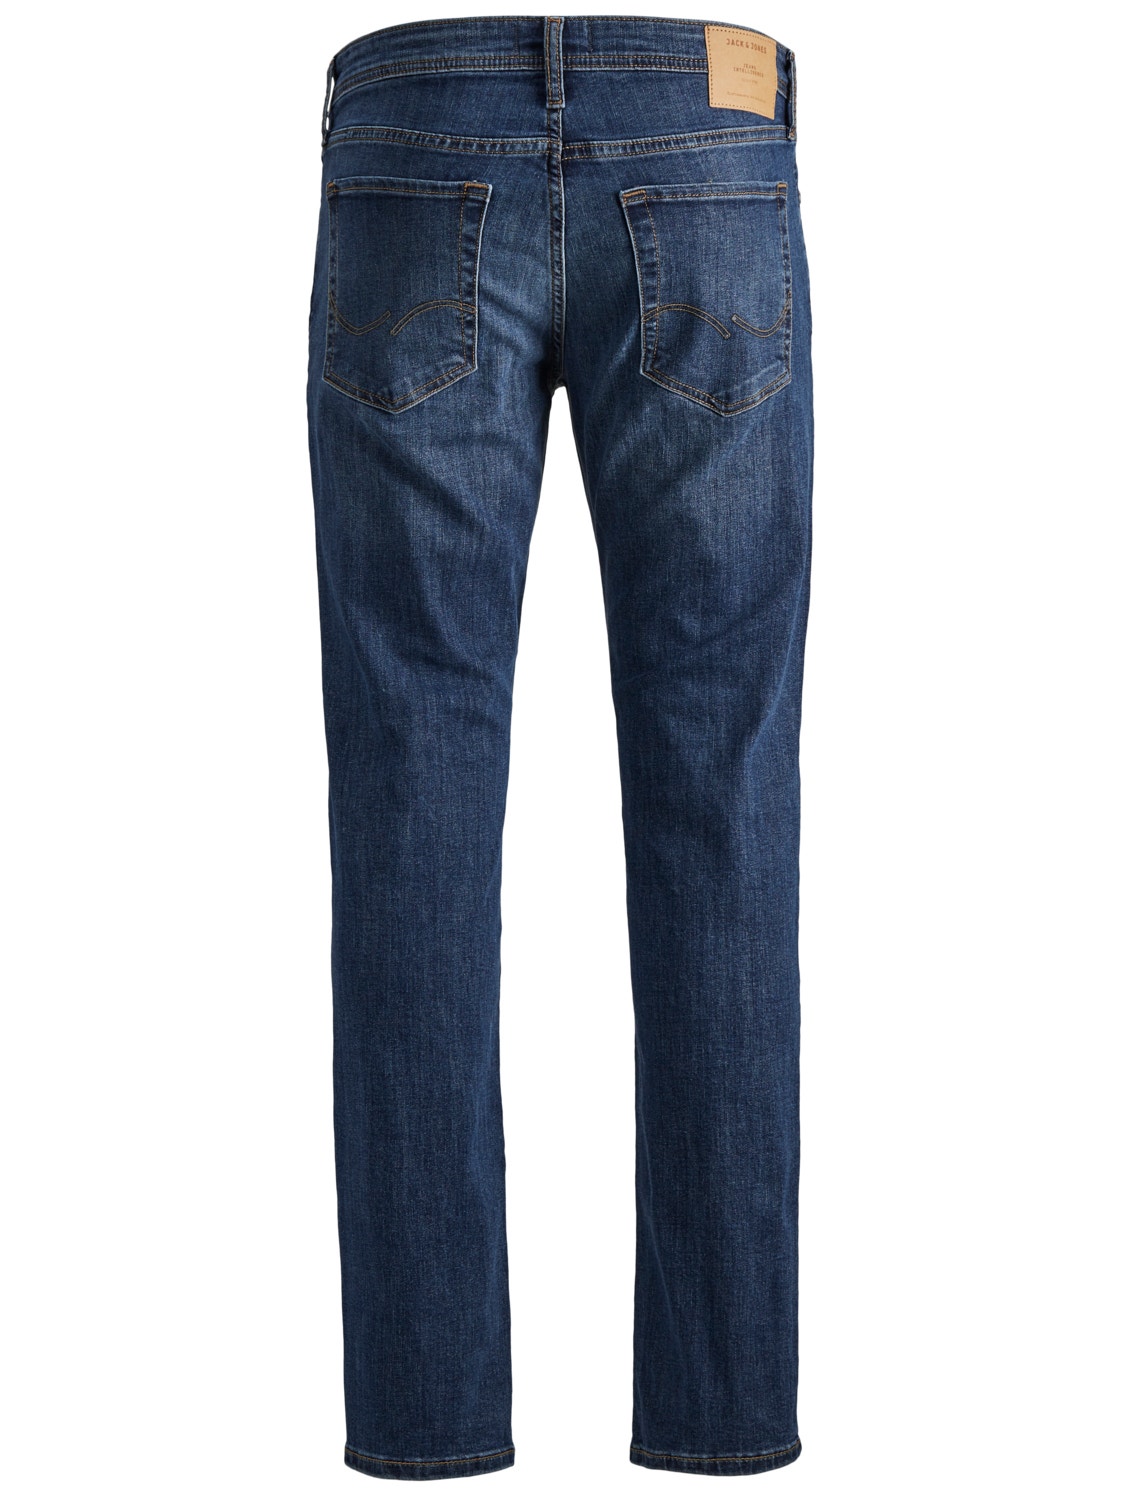 Medium & | AM Jack Jones® JJORIGINAL 814 Blue jeans Tapered fit | NOOS JJIMIKE